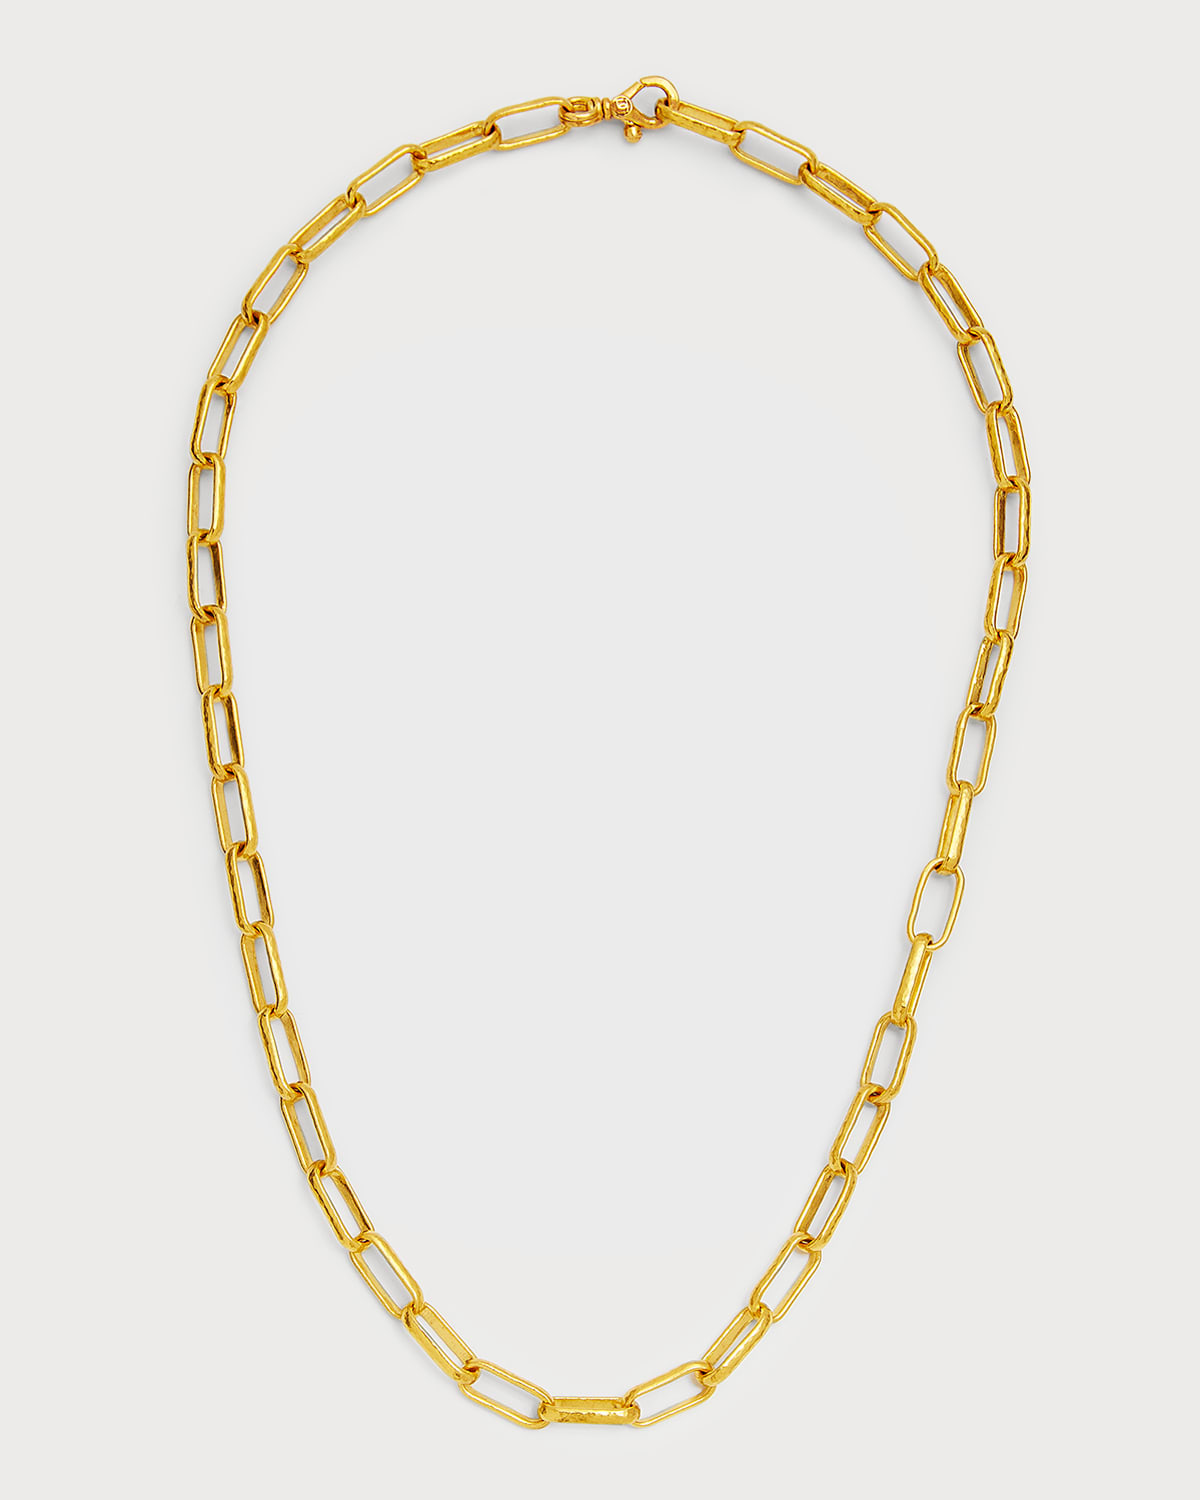 Gurhan Men's 24K Yellow Gold Chain Necklace, 20"L